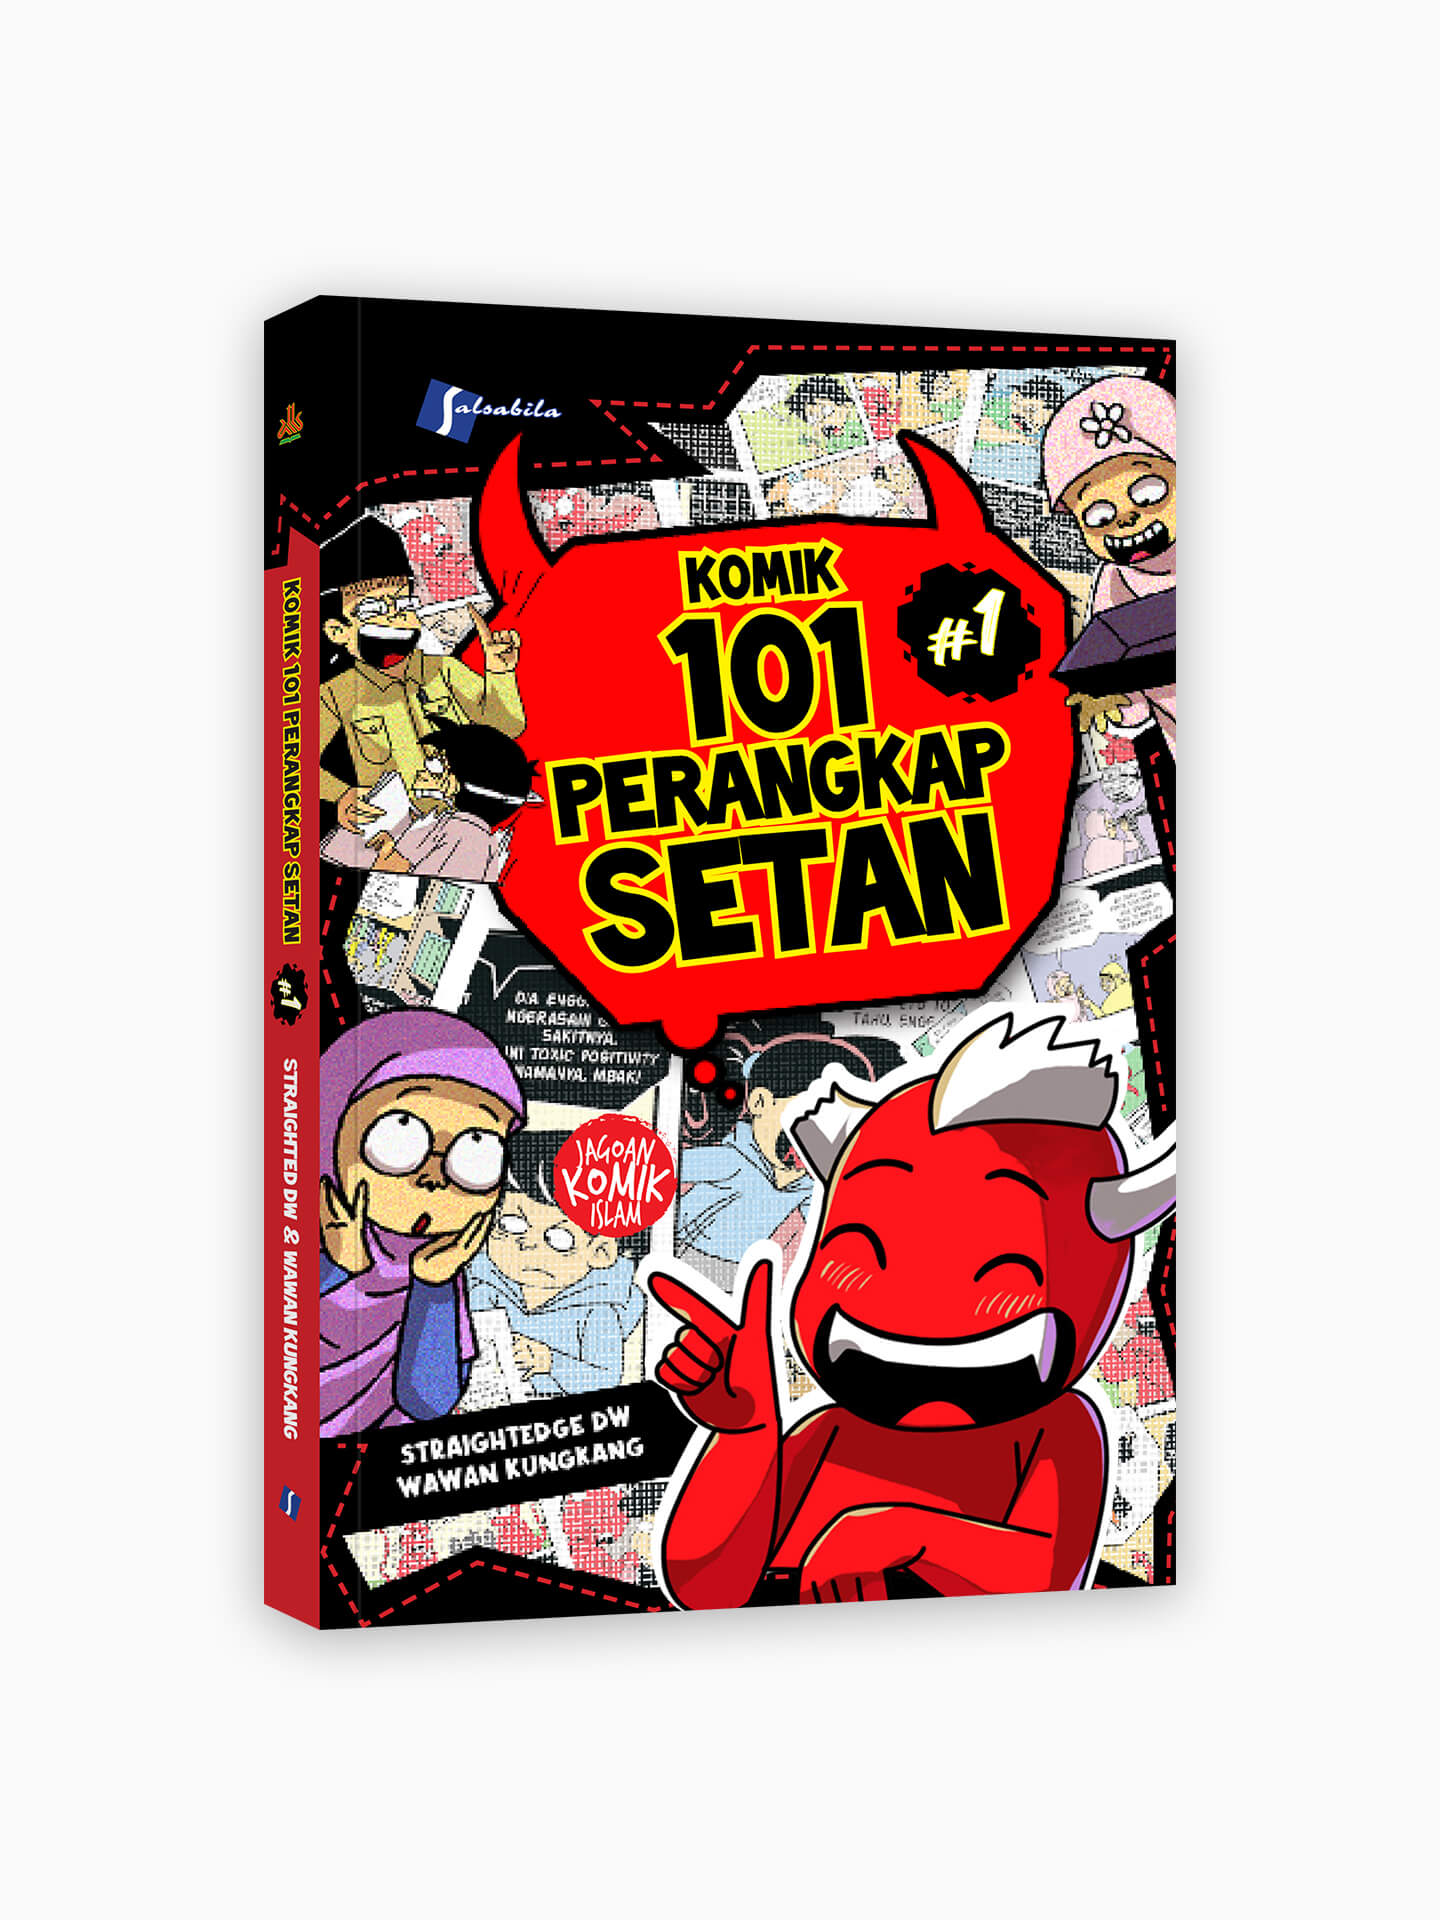 Komik 101 Perangkap Setan #1